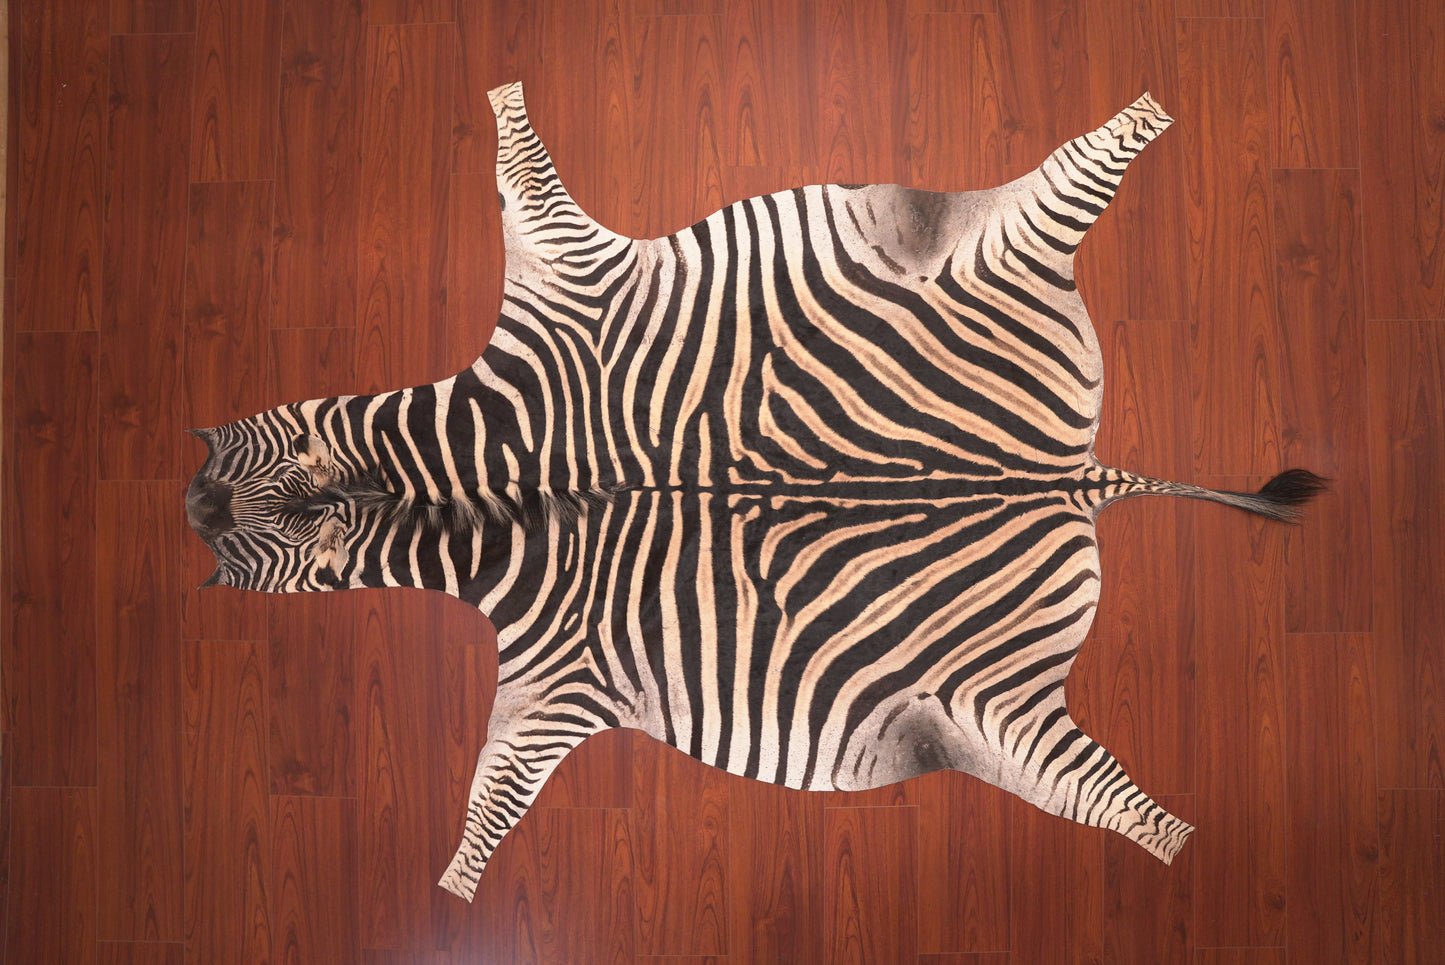 the nguni guy zebra hide rug animal skin carpet